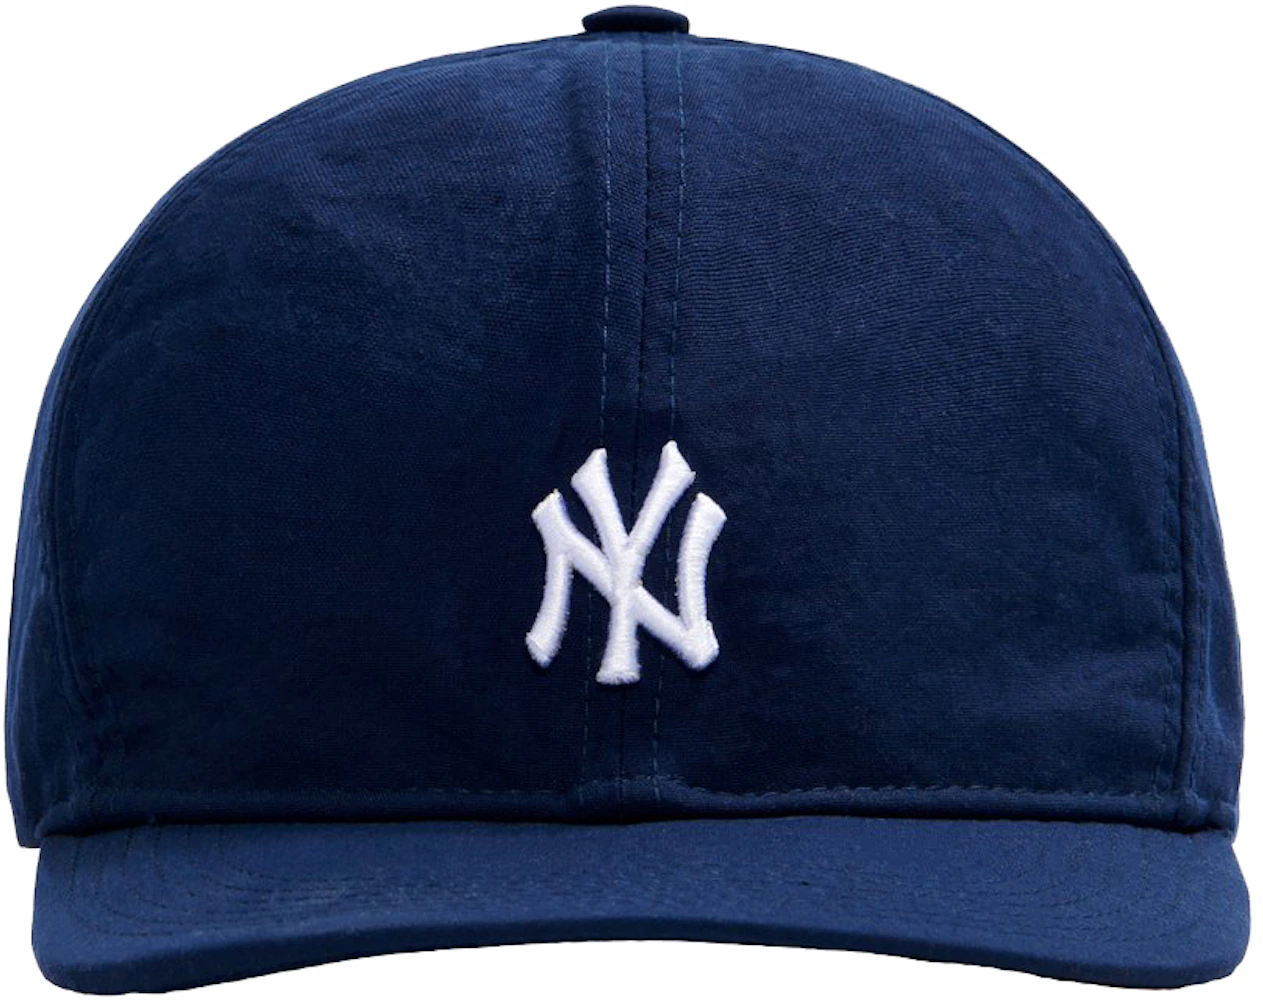 New York Yankees MLB Nautical Stripe Tote Bag